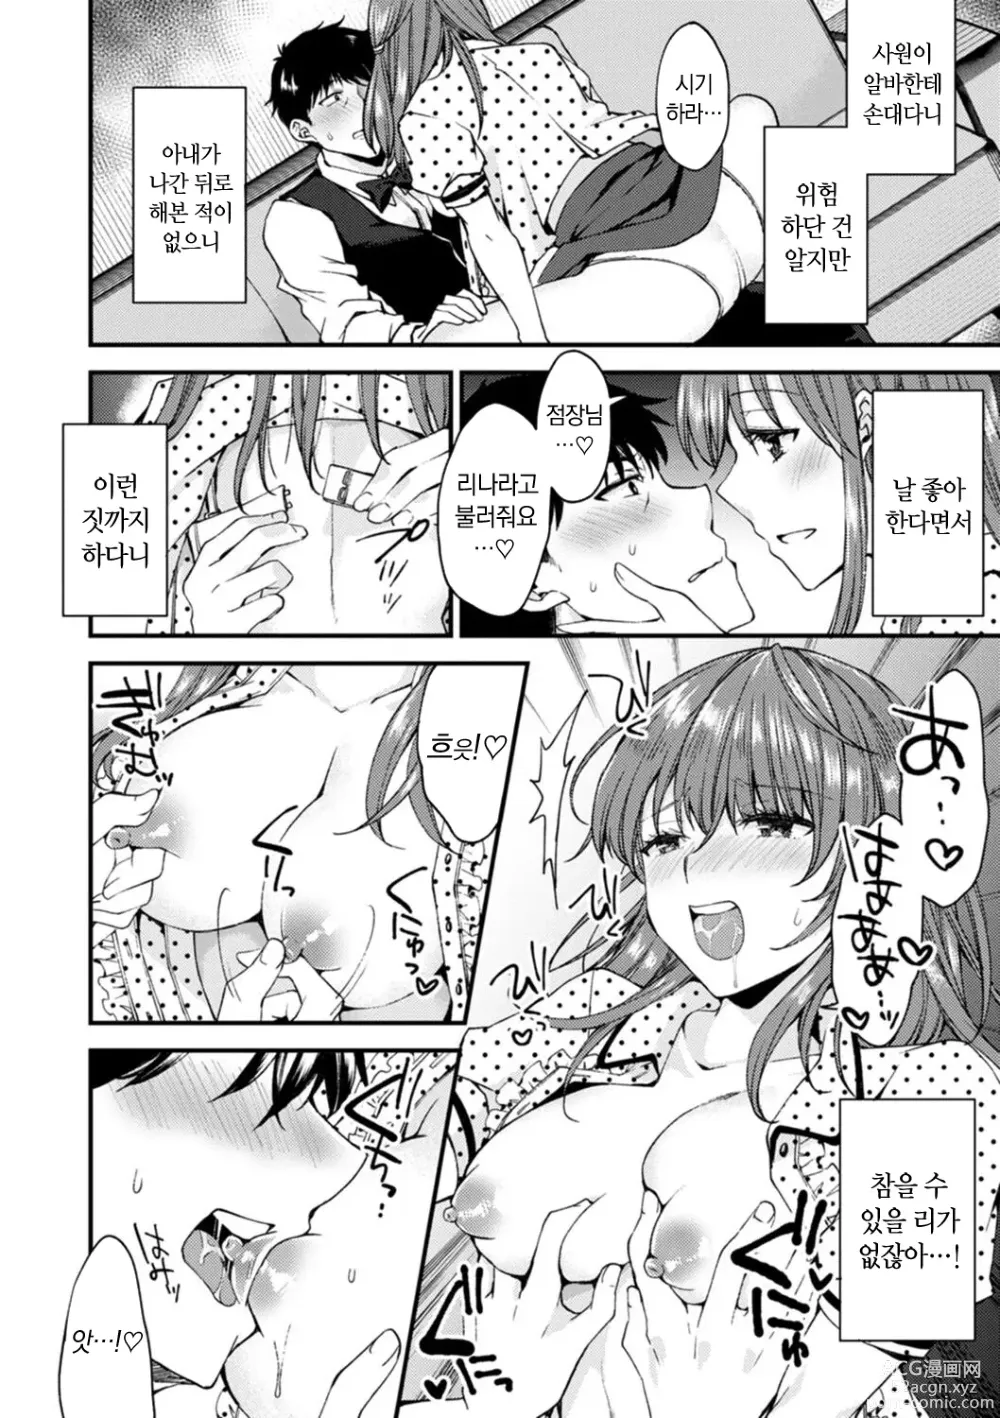 Page 28 of manga 취미가 바니걸이라니 정말이에요?